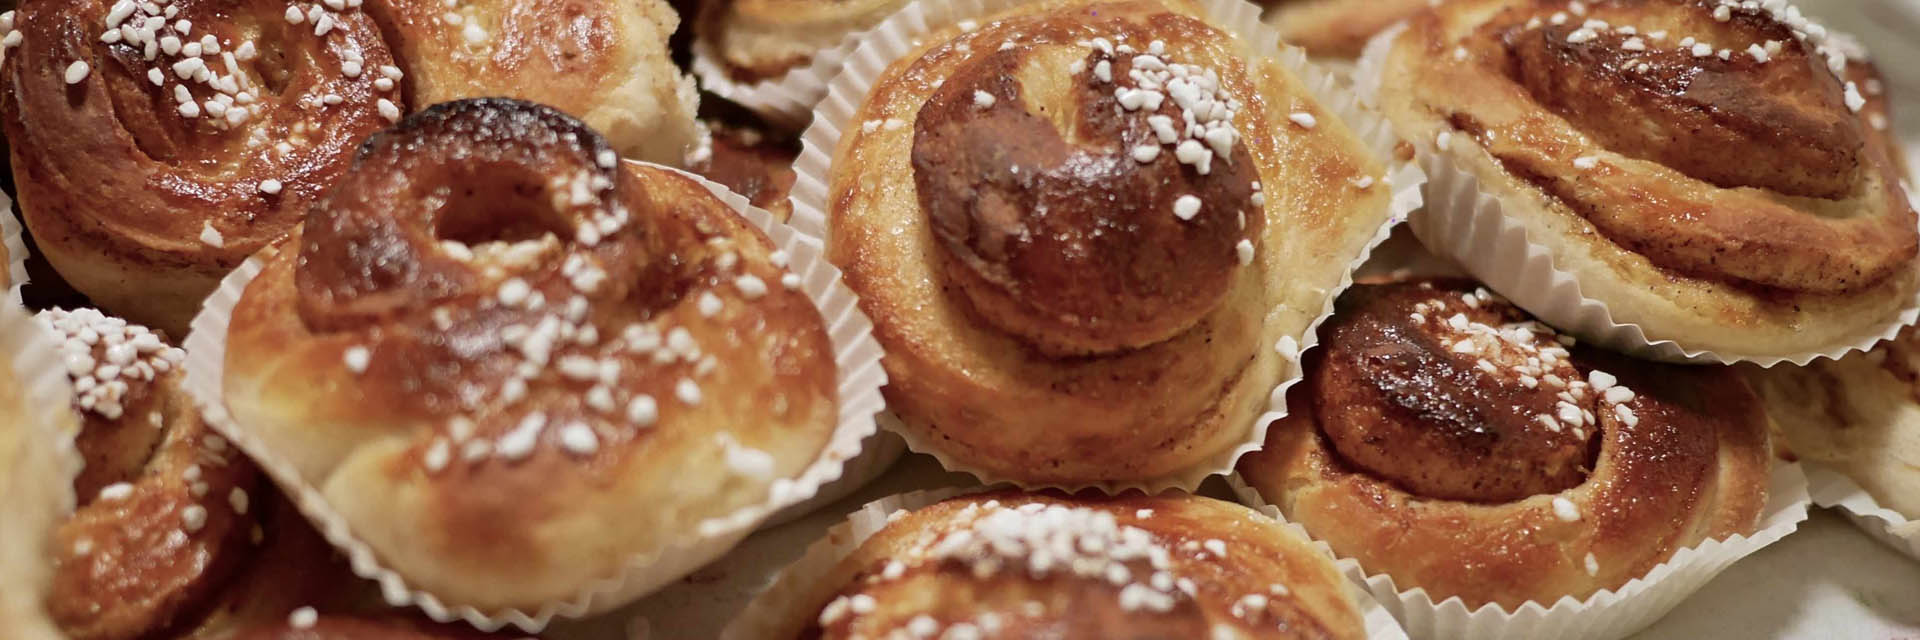 Family trip - bake Swedish cinnamon rolls